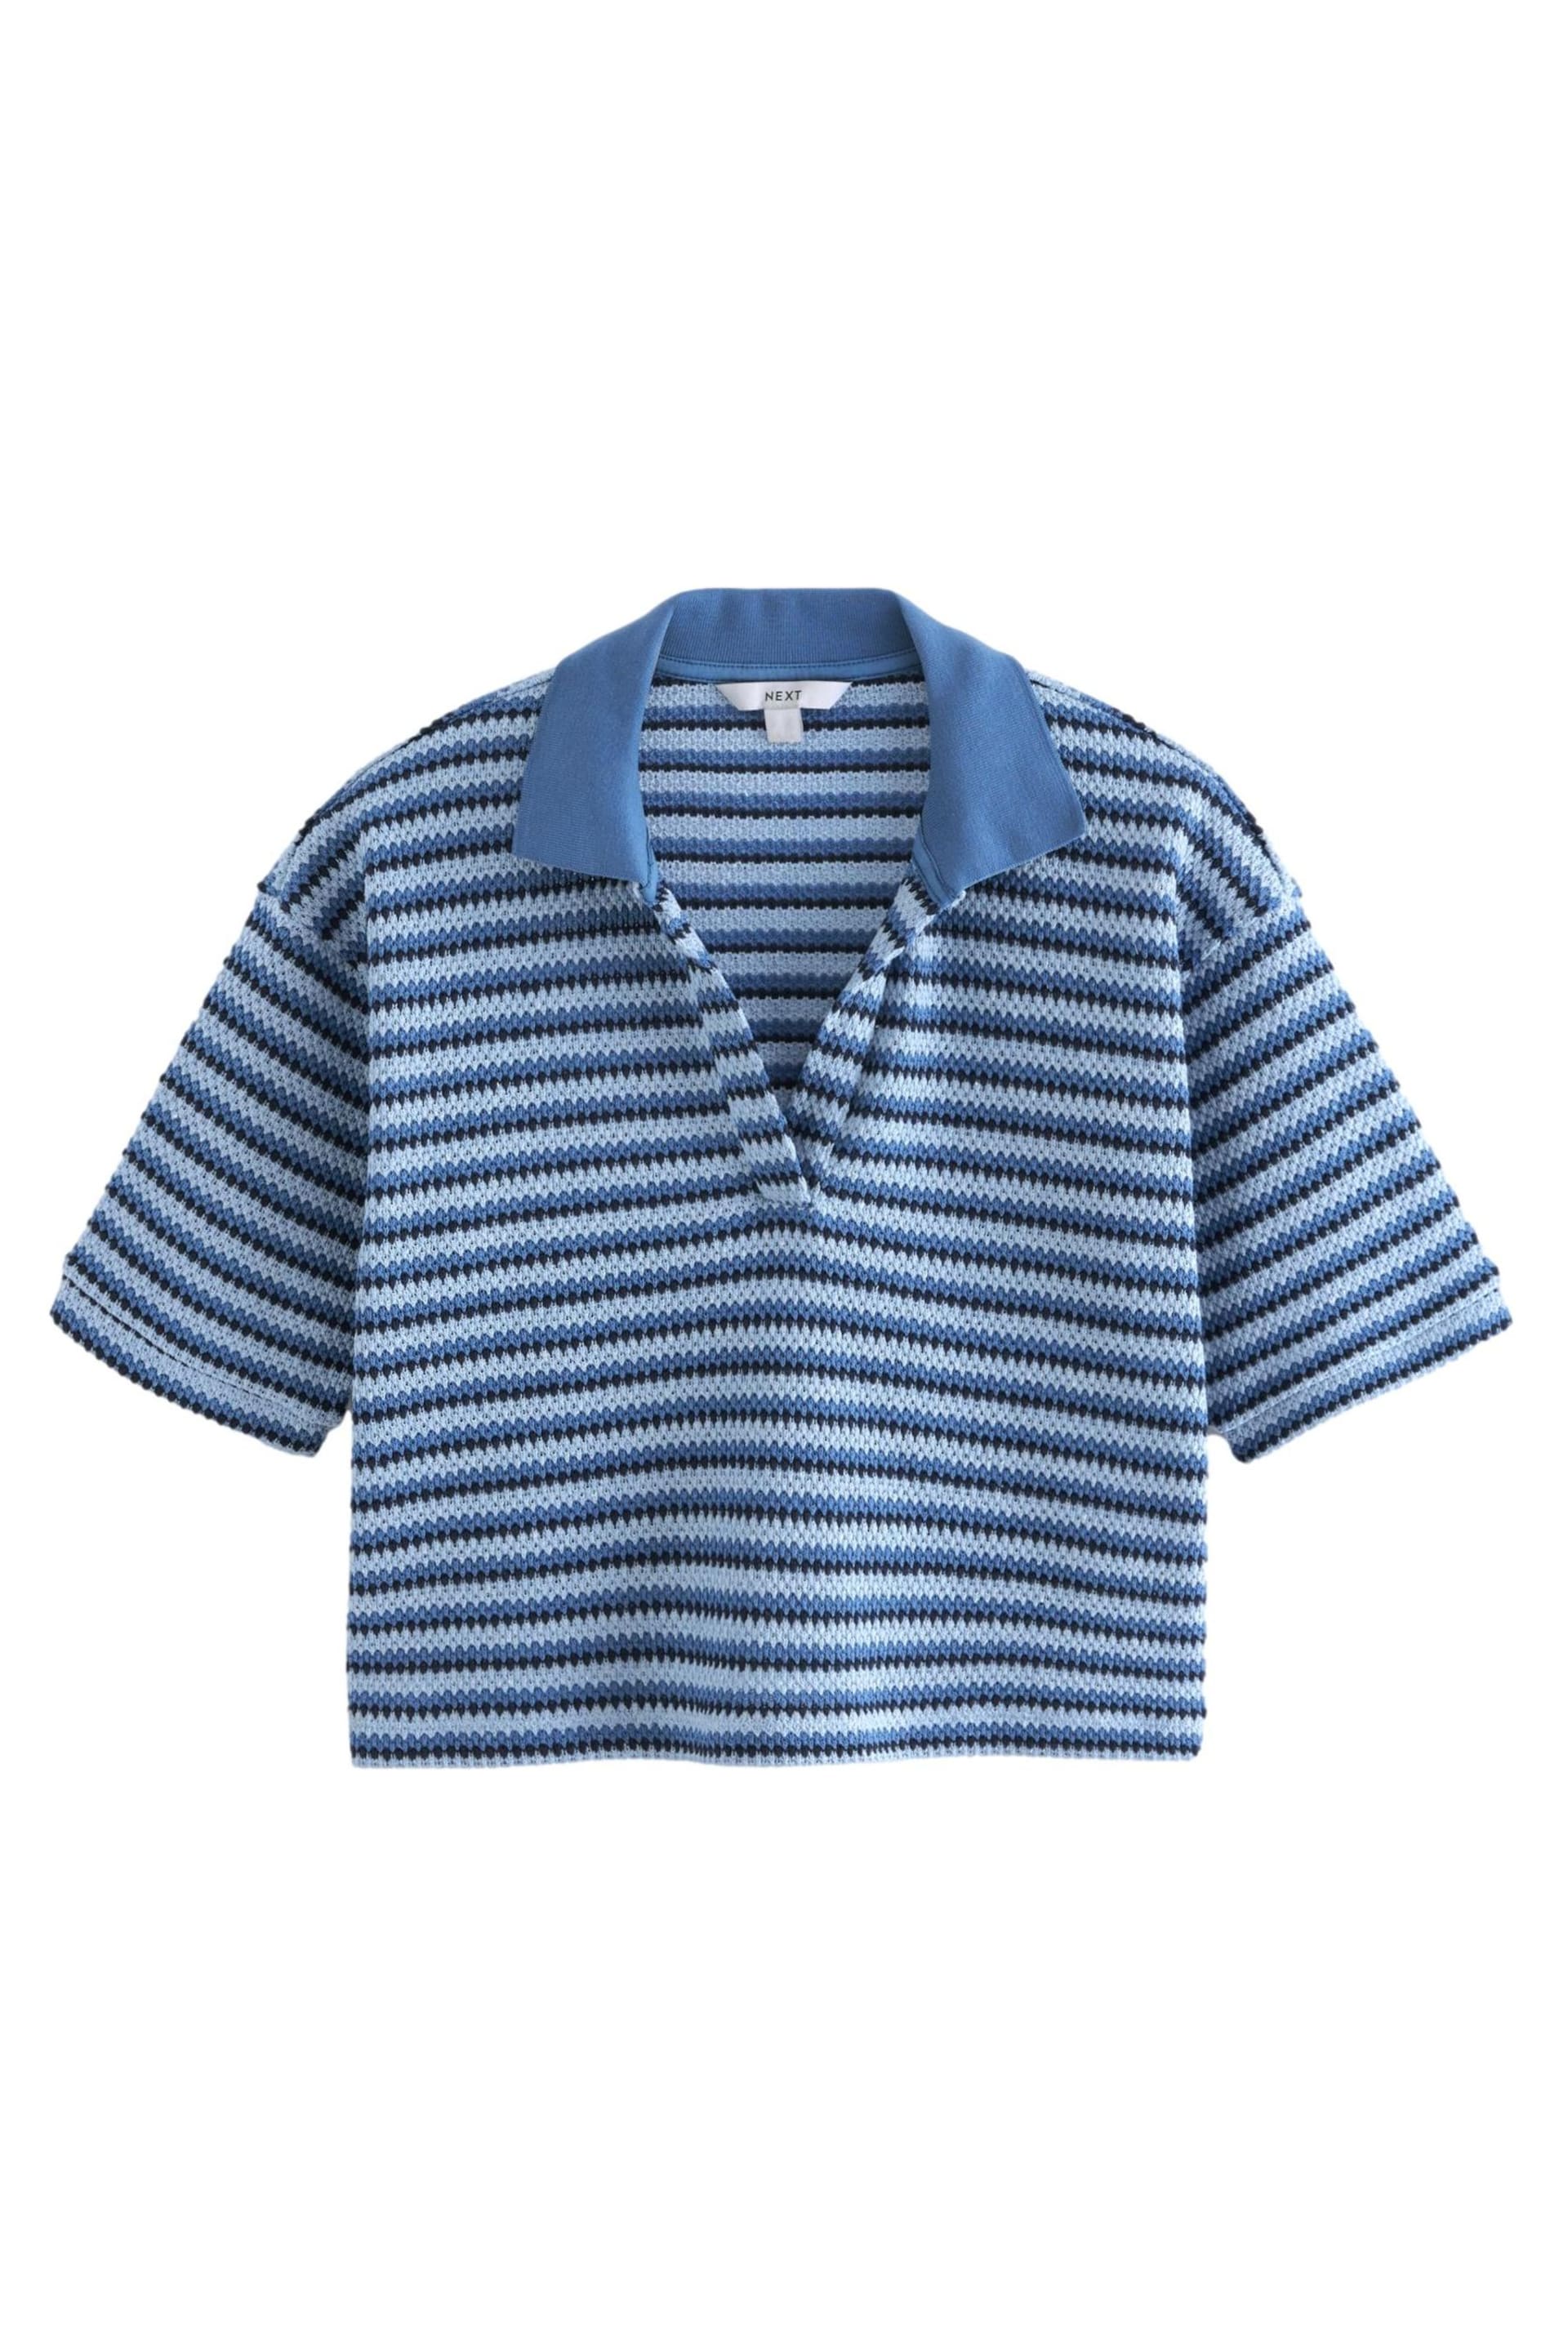 Blue Short Sleeve Crochet Polo Shirt - Image 5 of 6